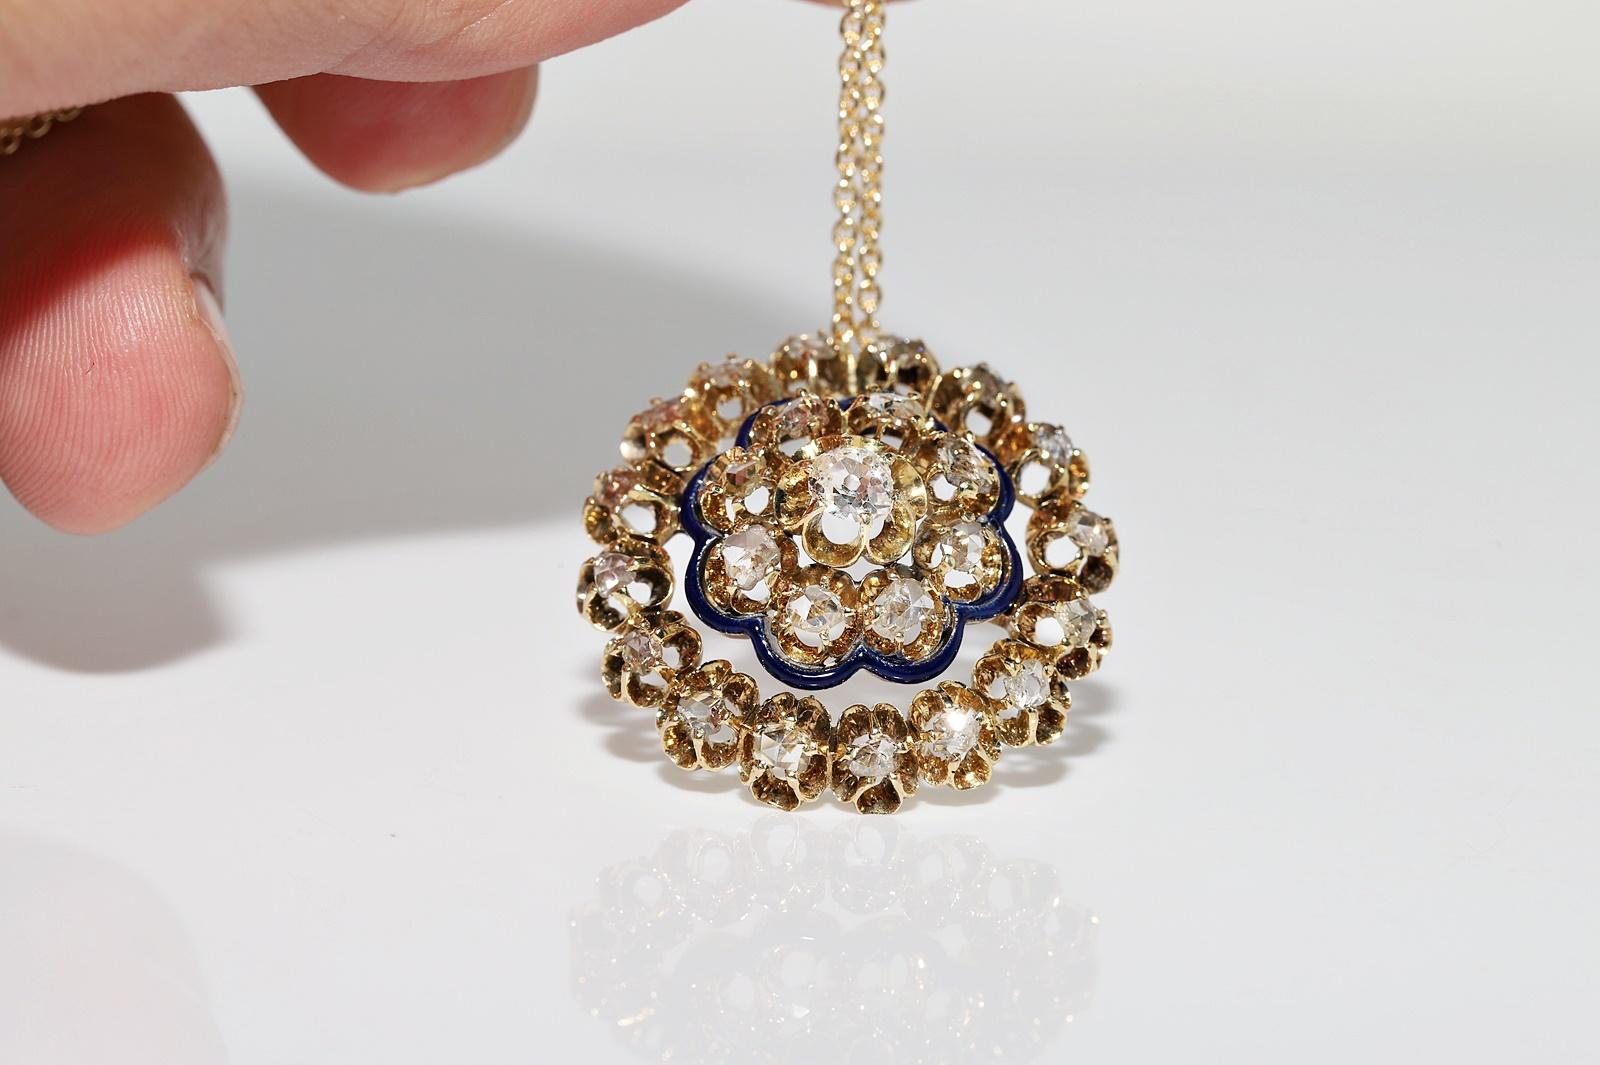 Antique Circa 1900s 18k Gold Natural Diamond And Enamel Pendant Necklace For Sale 8